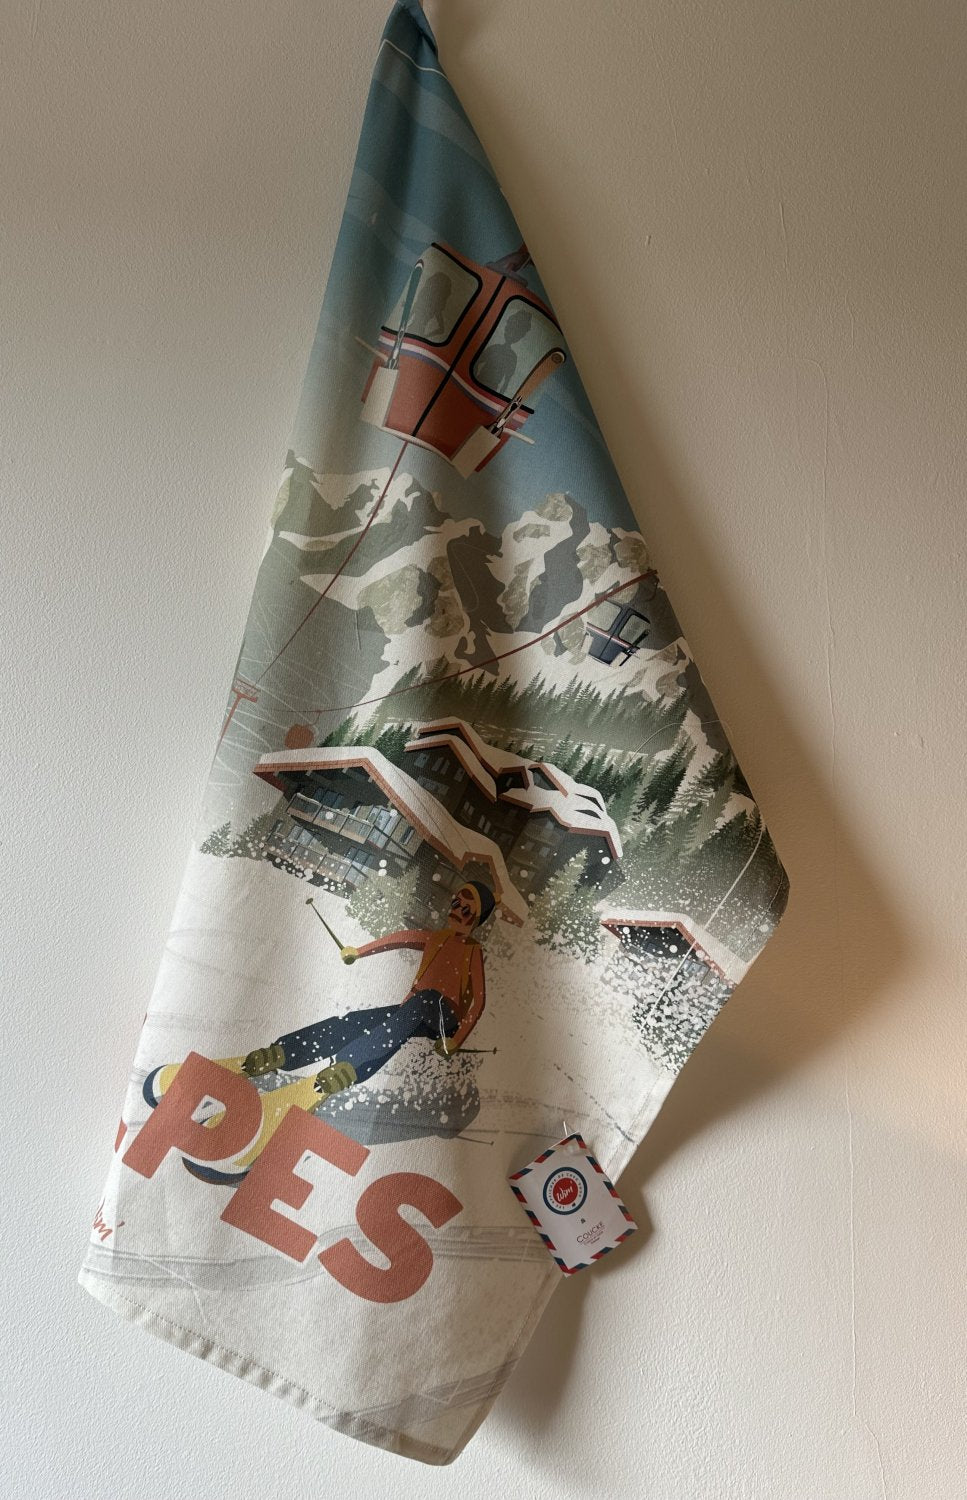 Coucke "WIM® Les Alpes", Printed cotton tea towel. Designed in France.